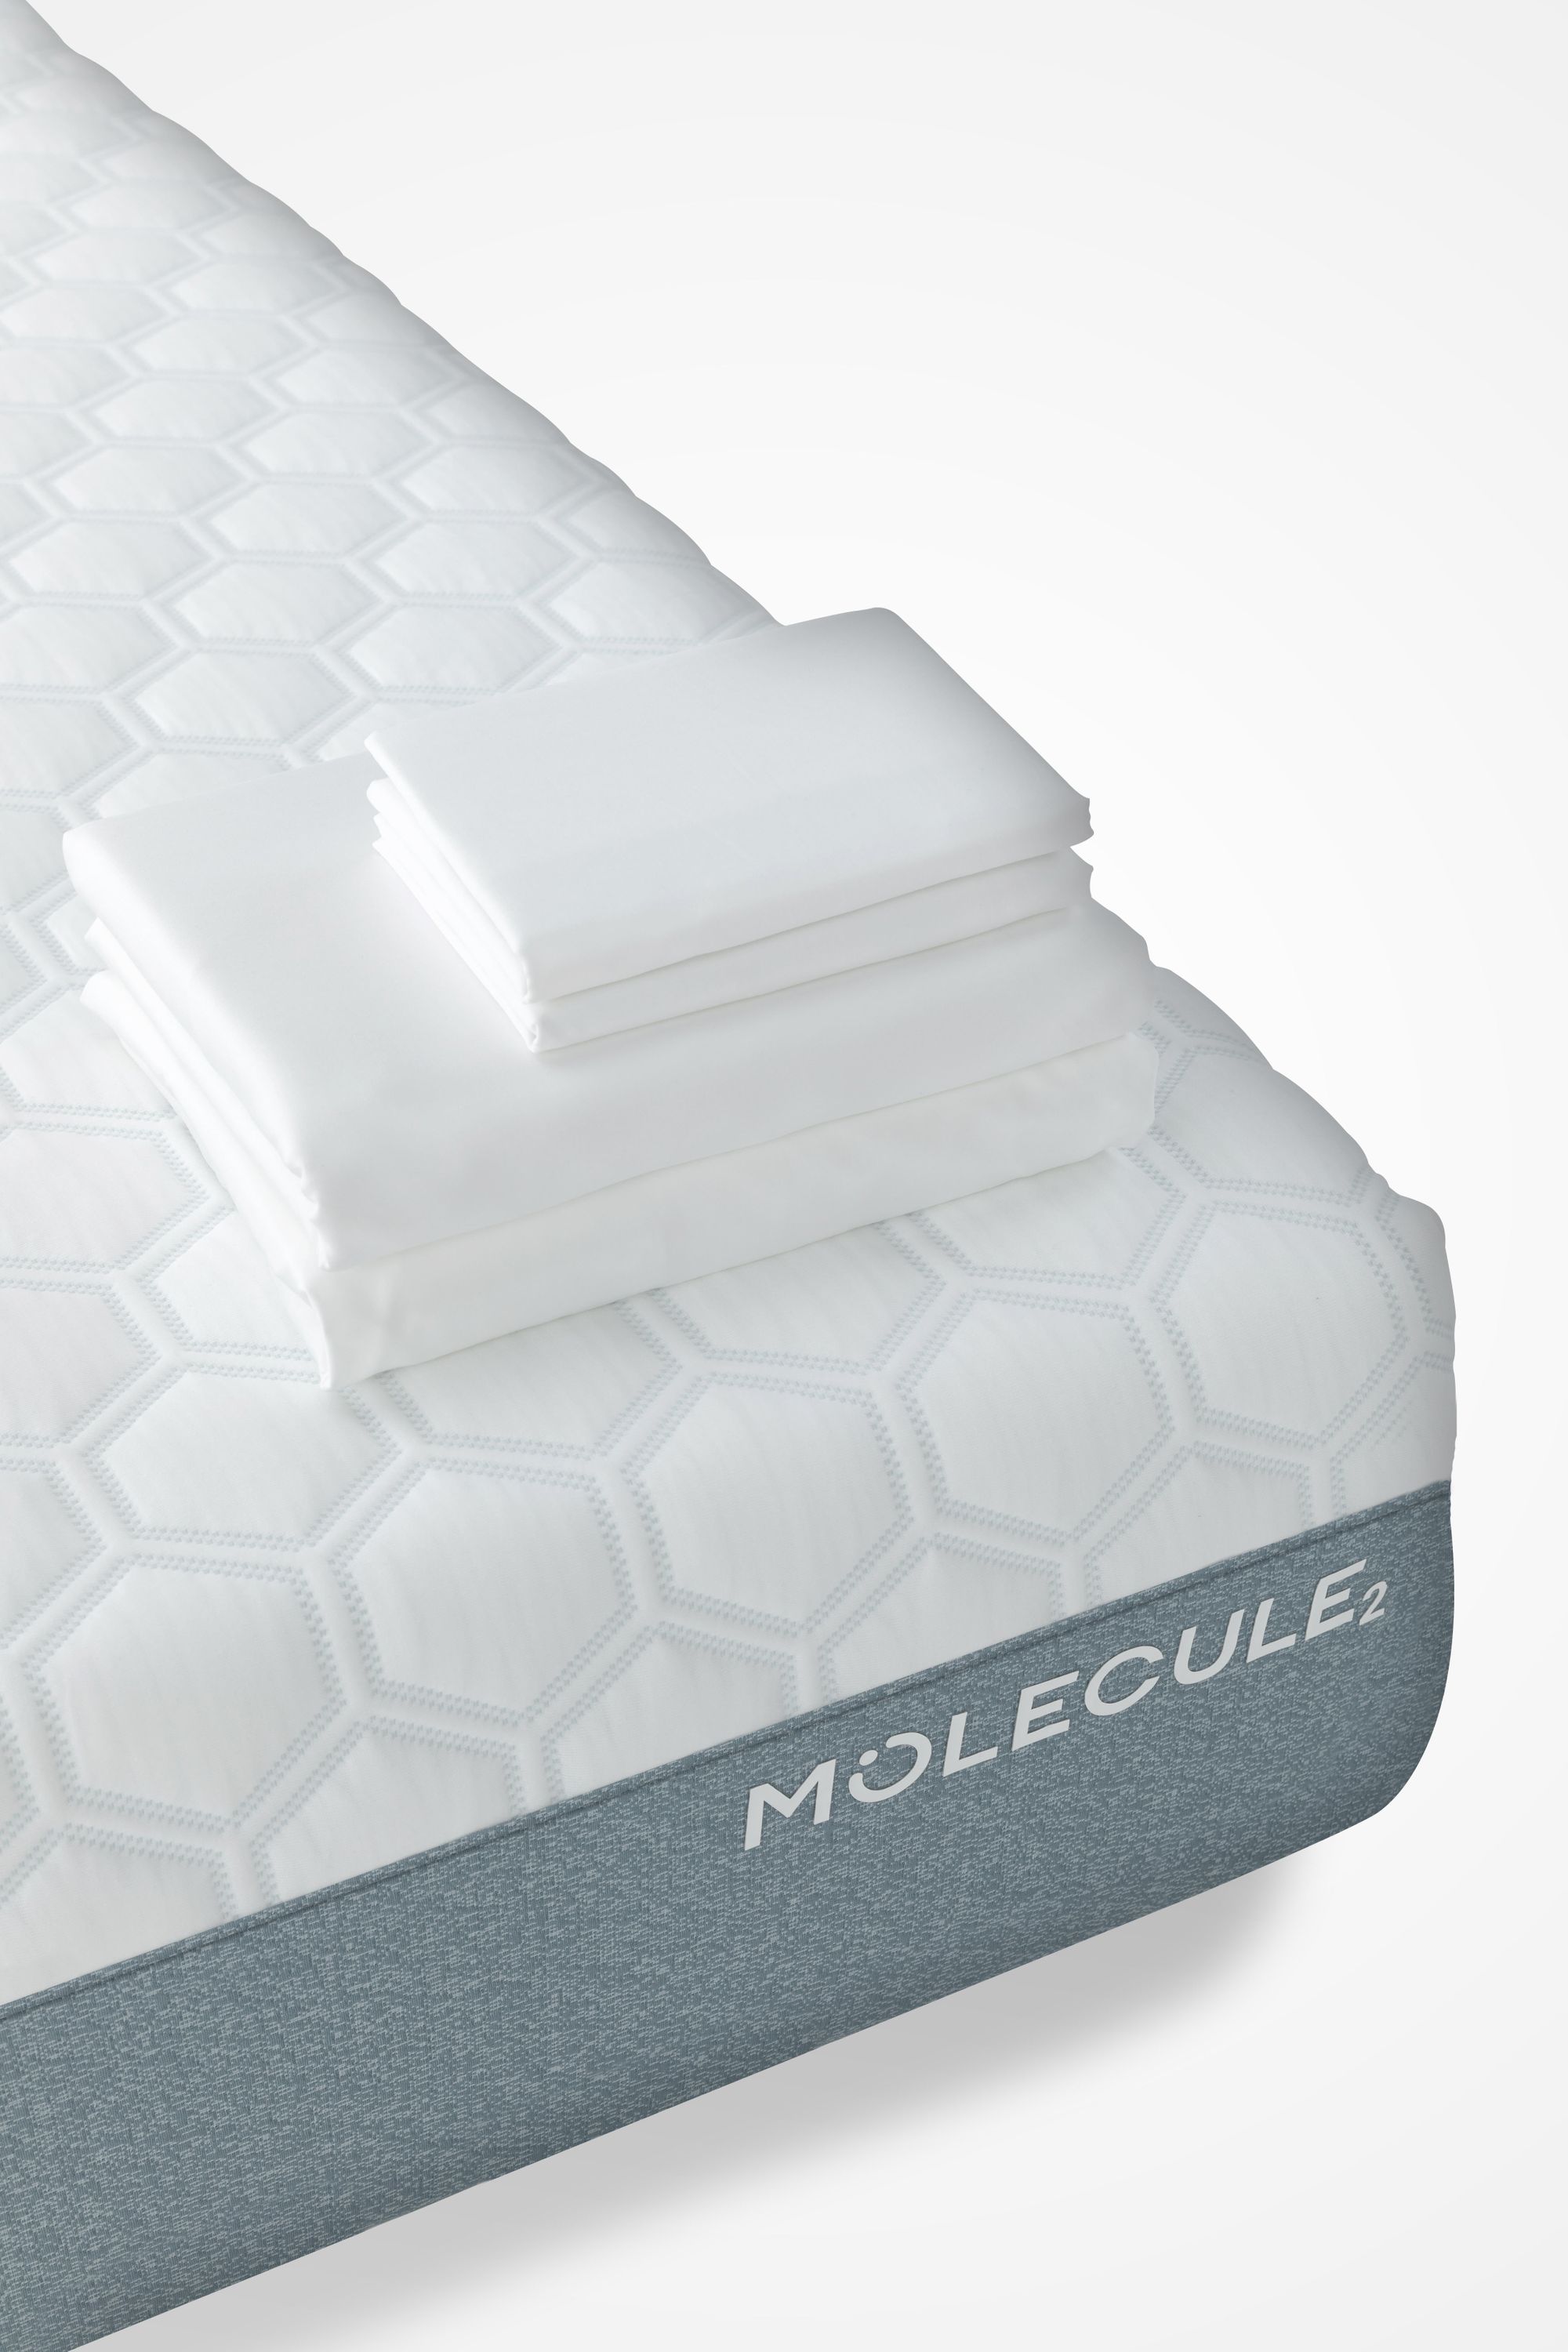 Molecule Product Sheet